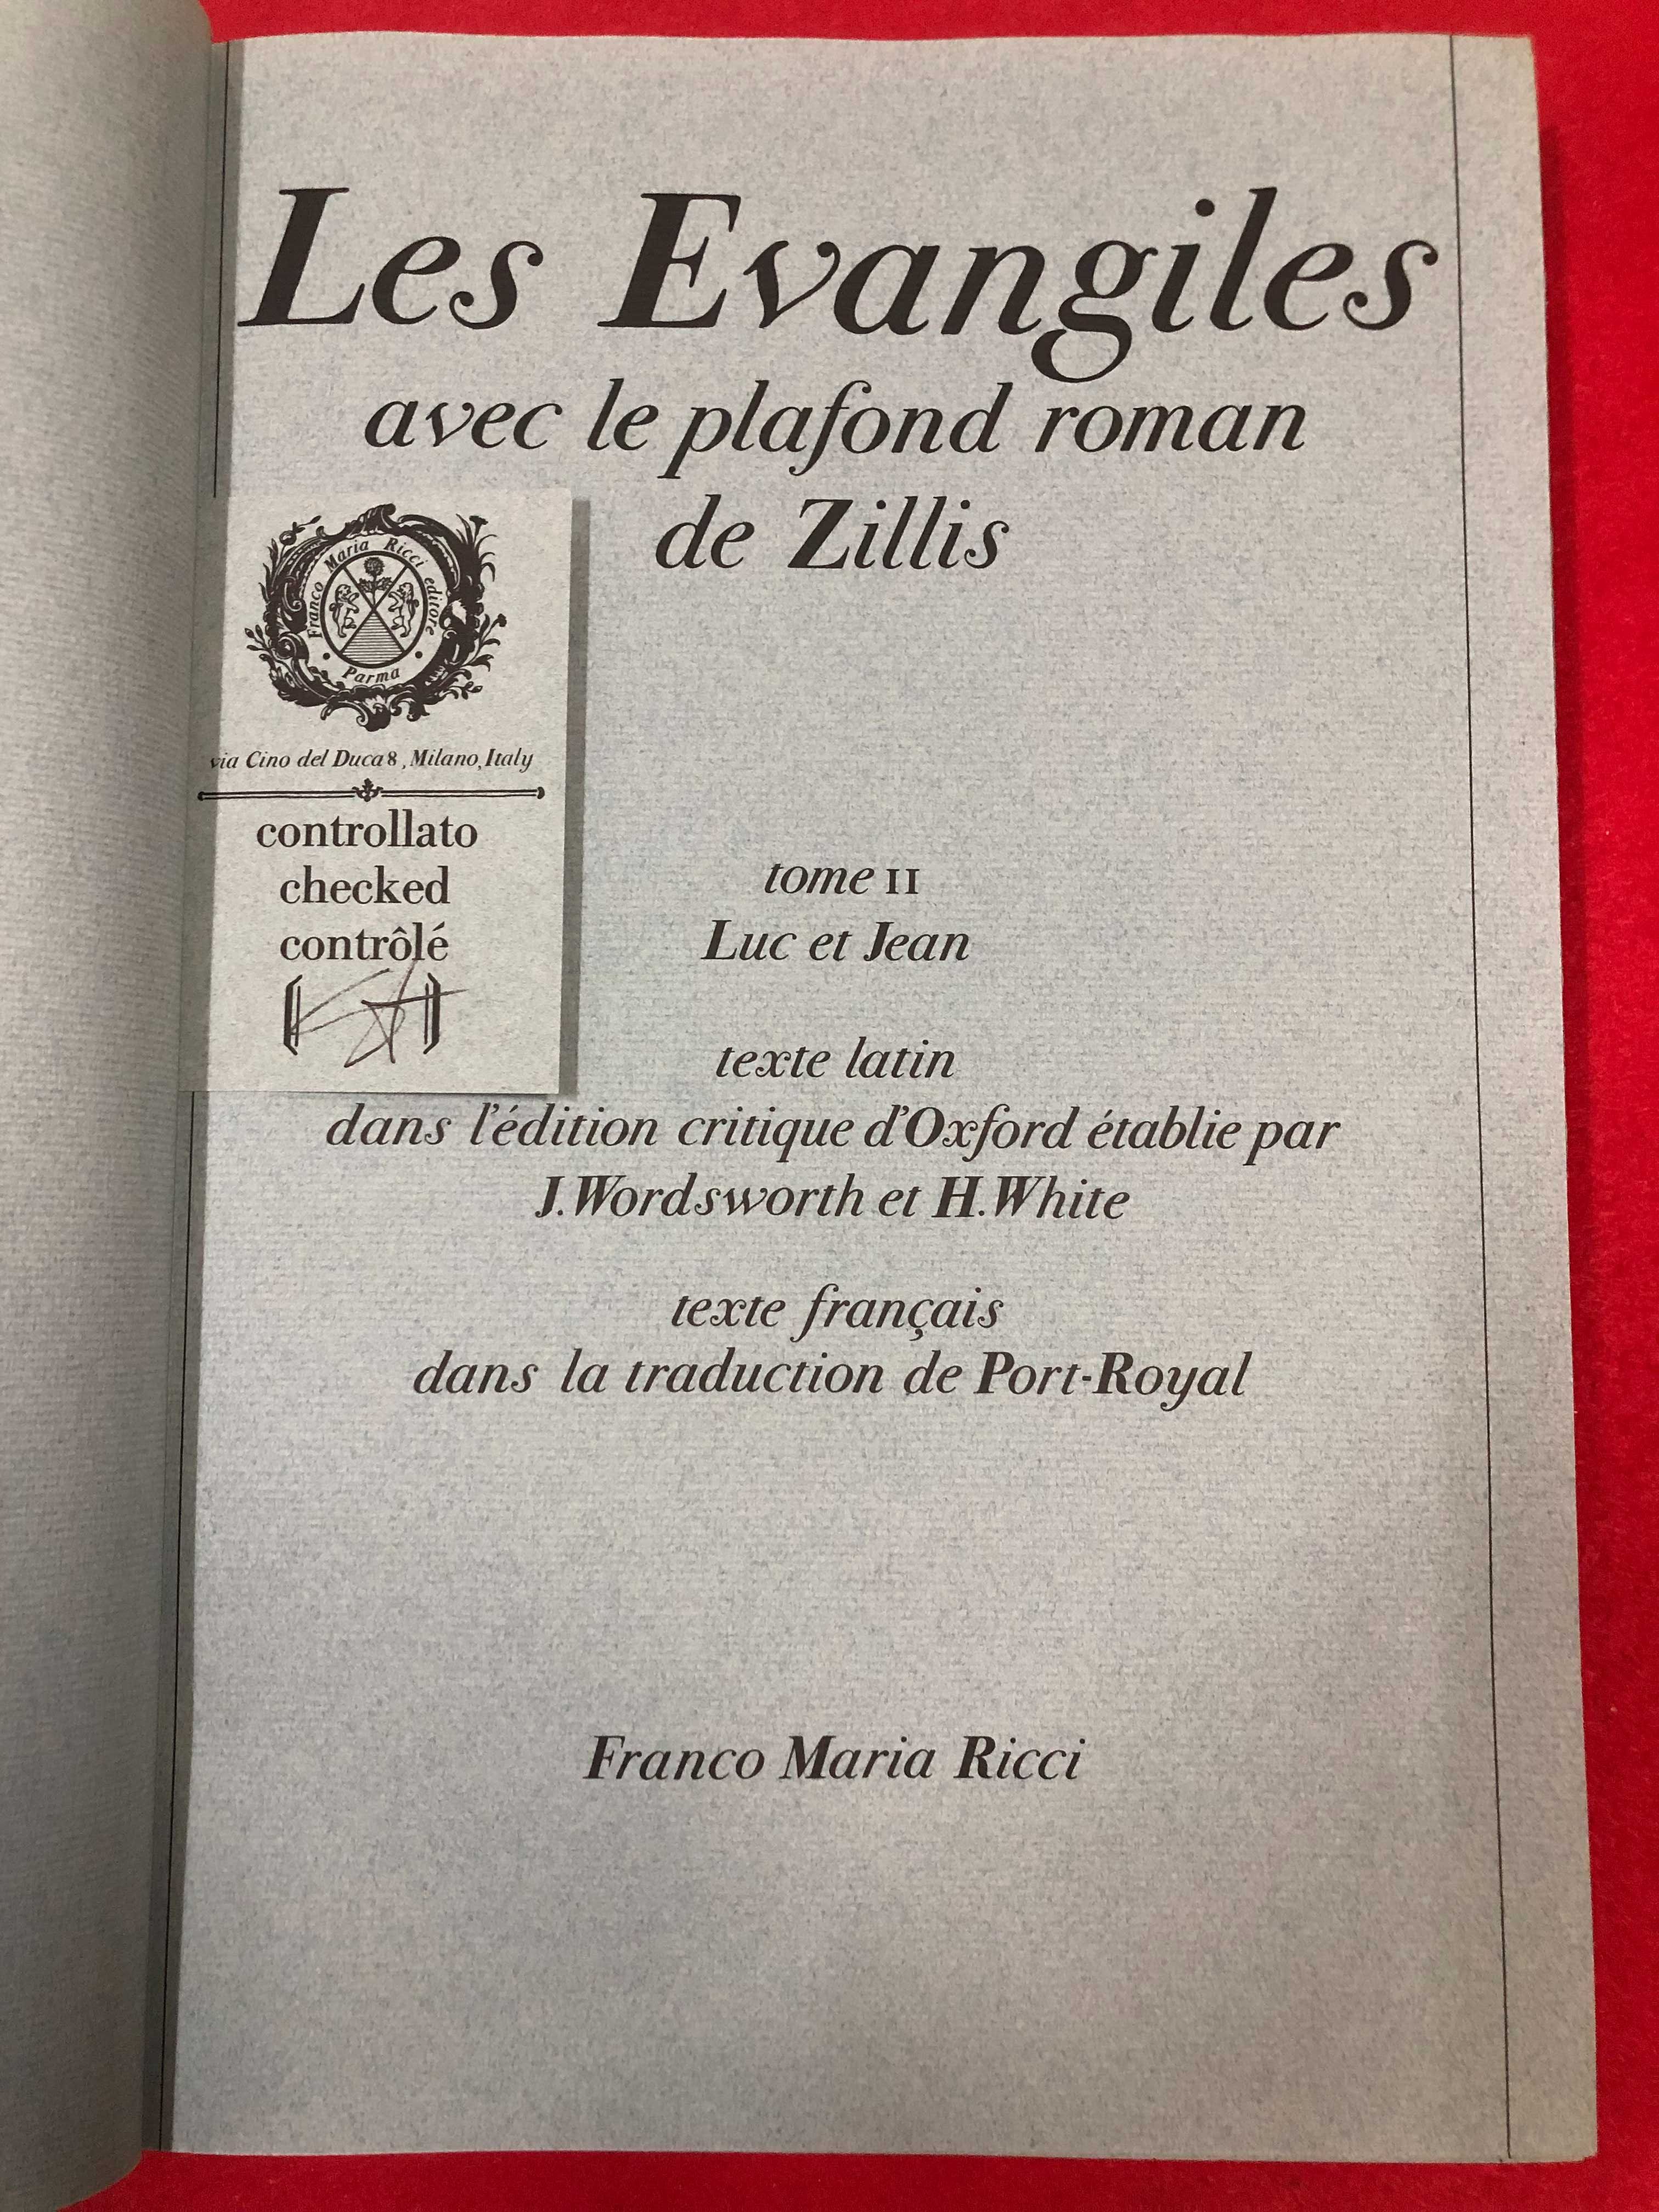 Les Evangiles avec le plafond roman de Zillis - Franco Maria Ricci